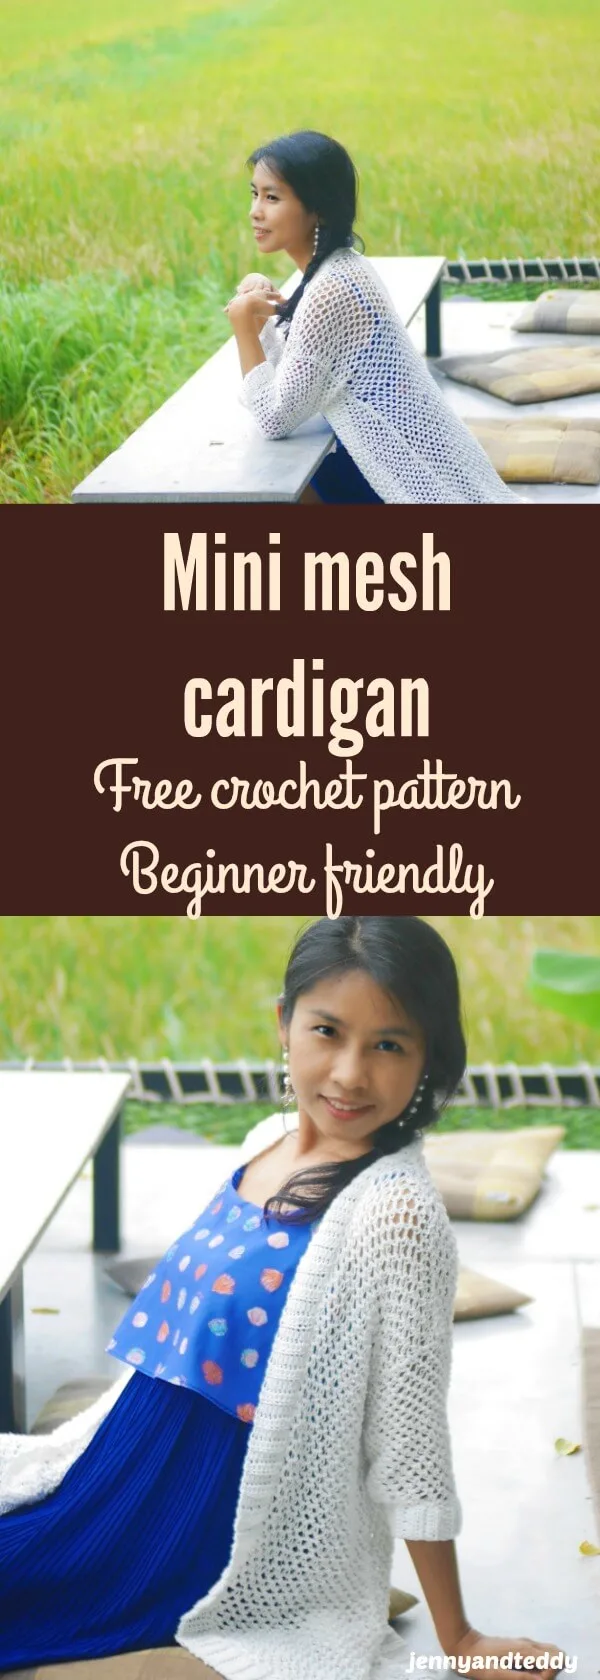 mini mesh cardigan free crochet pattern beginner friendly